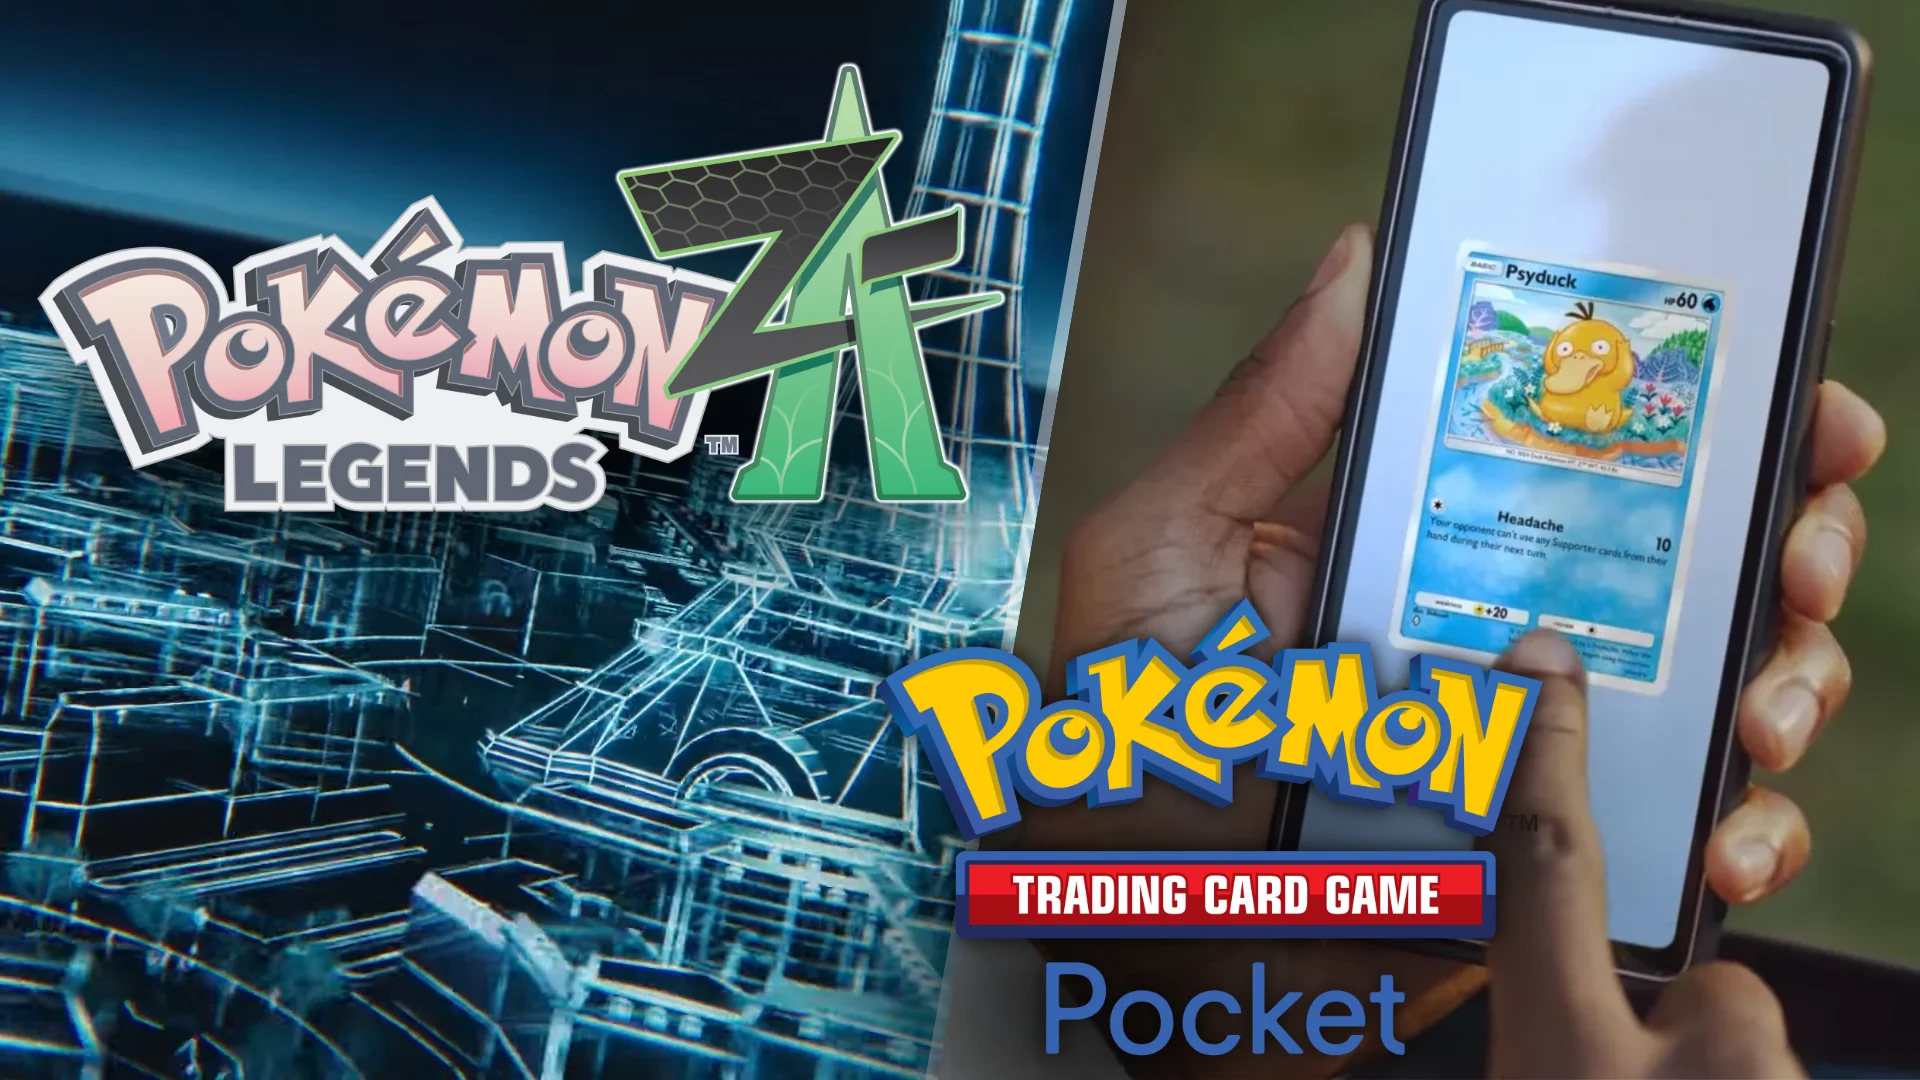 Pokémon Legends: Z-A and Pokémon Trading Card Game Pocket Artwork